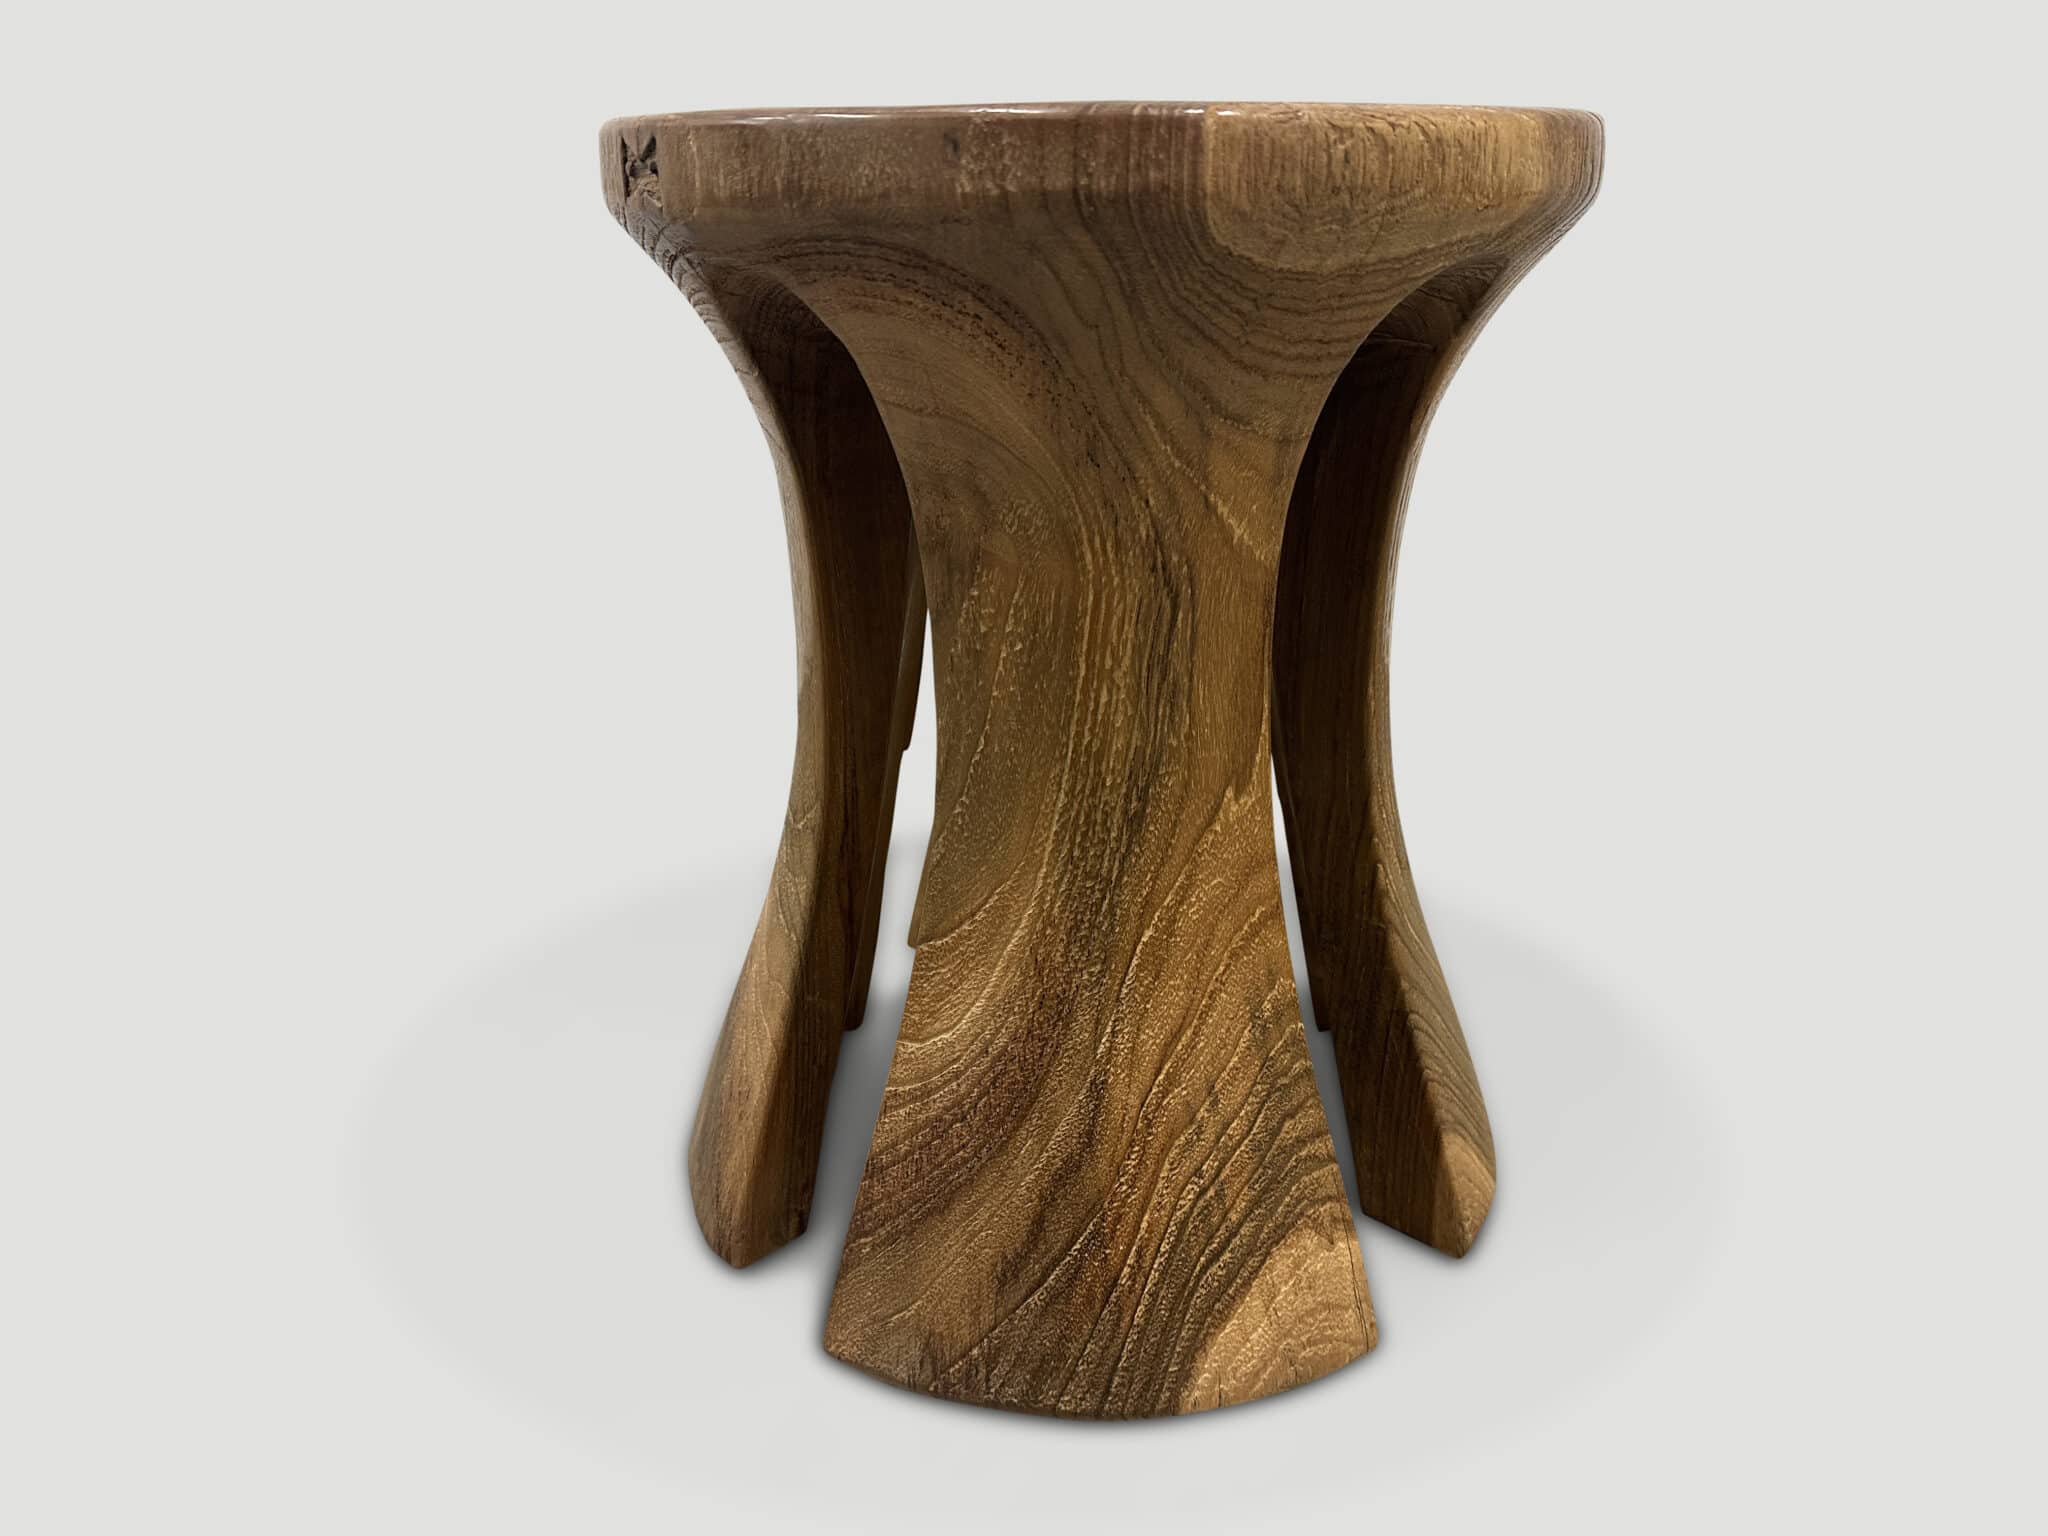 teak wood sculptural side table or stool